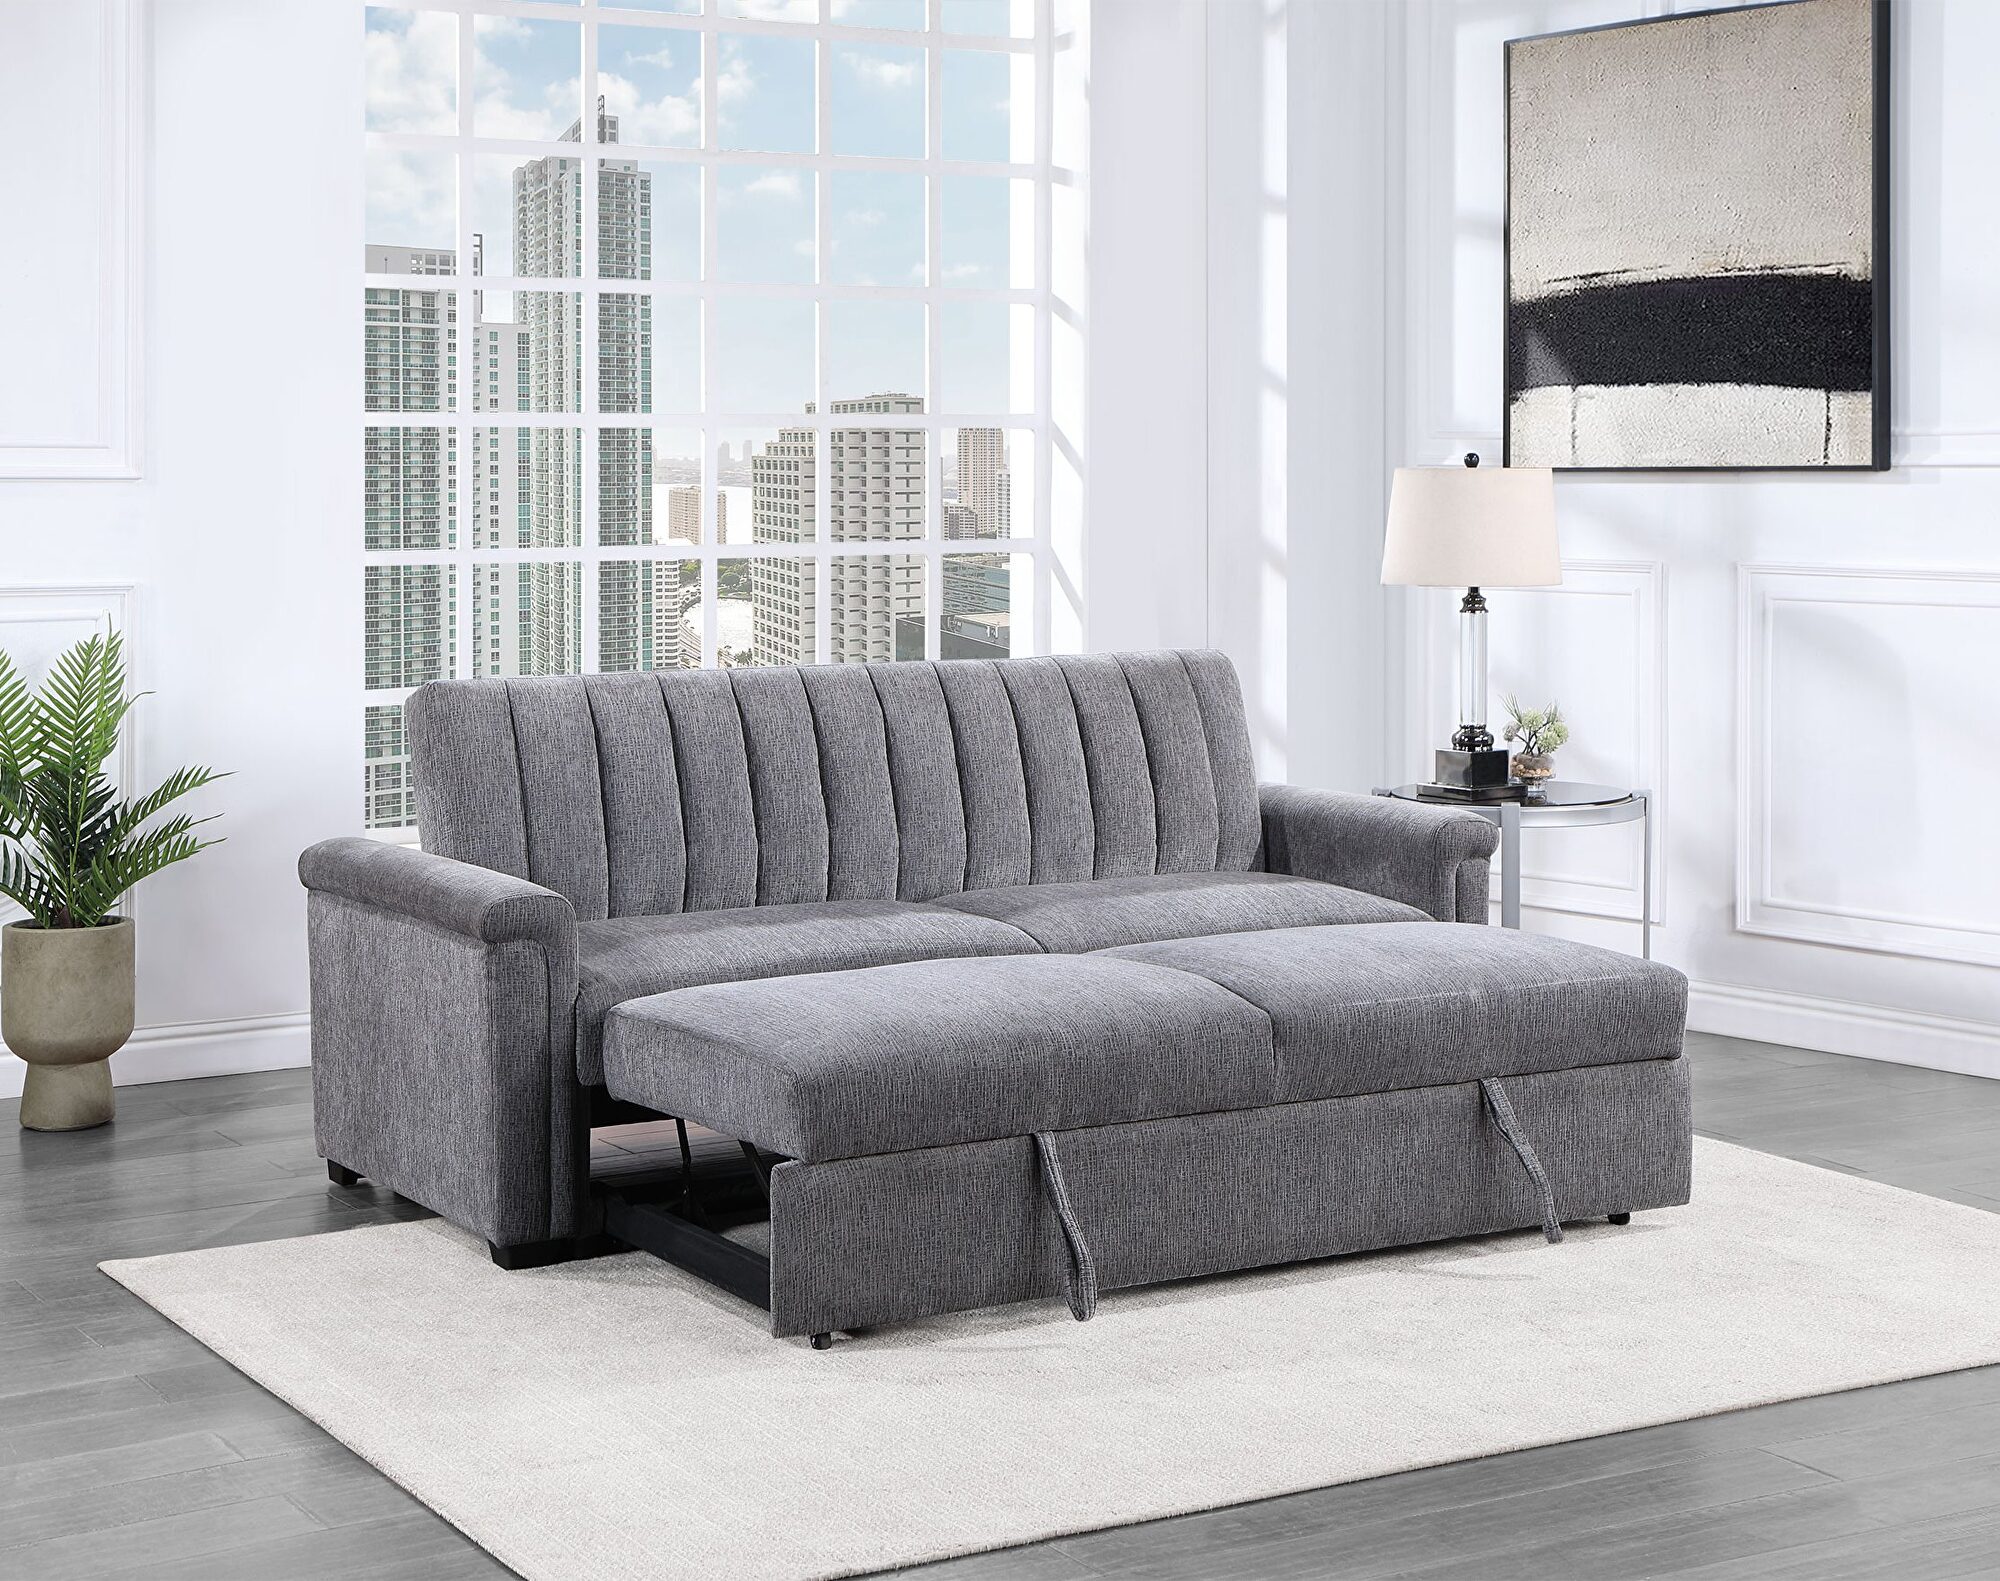 Gray | SOFA Global Sofa Bed GREY-PULL BED Comfyco G0201 OUT U0201-DARK